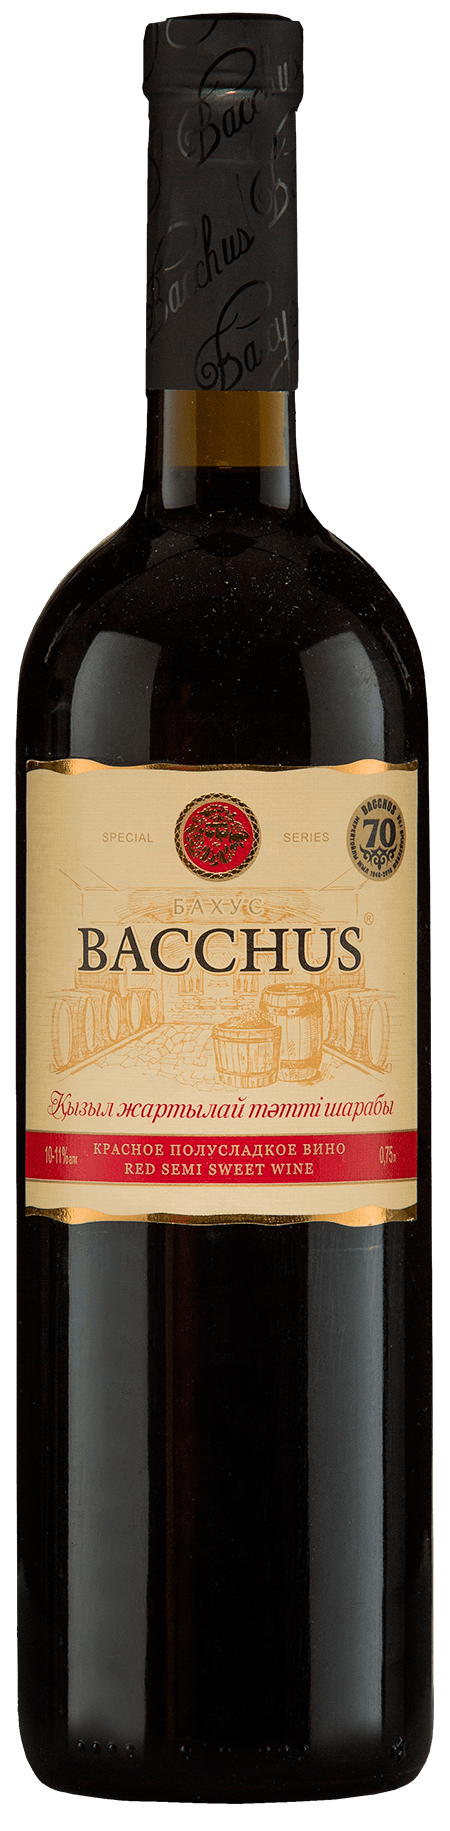 Semi-sweet red wine Bacchus